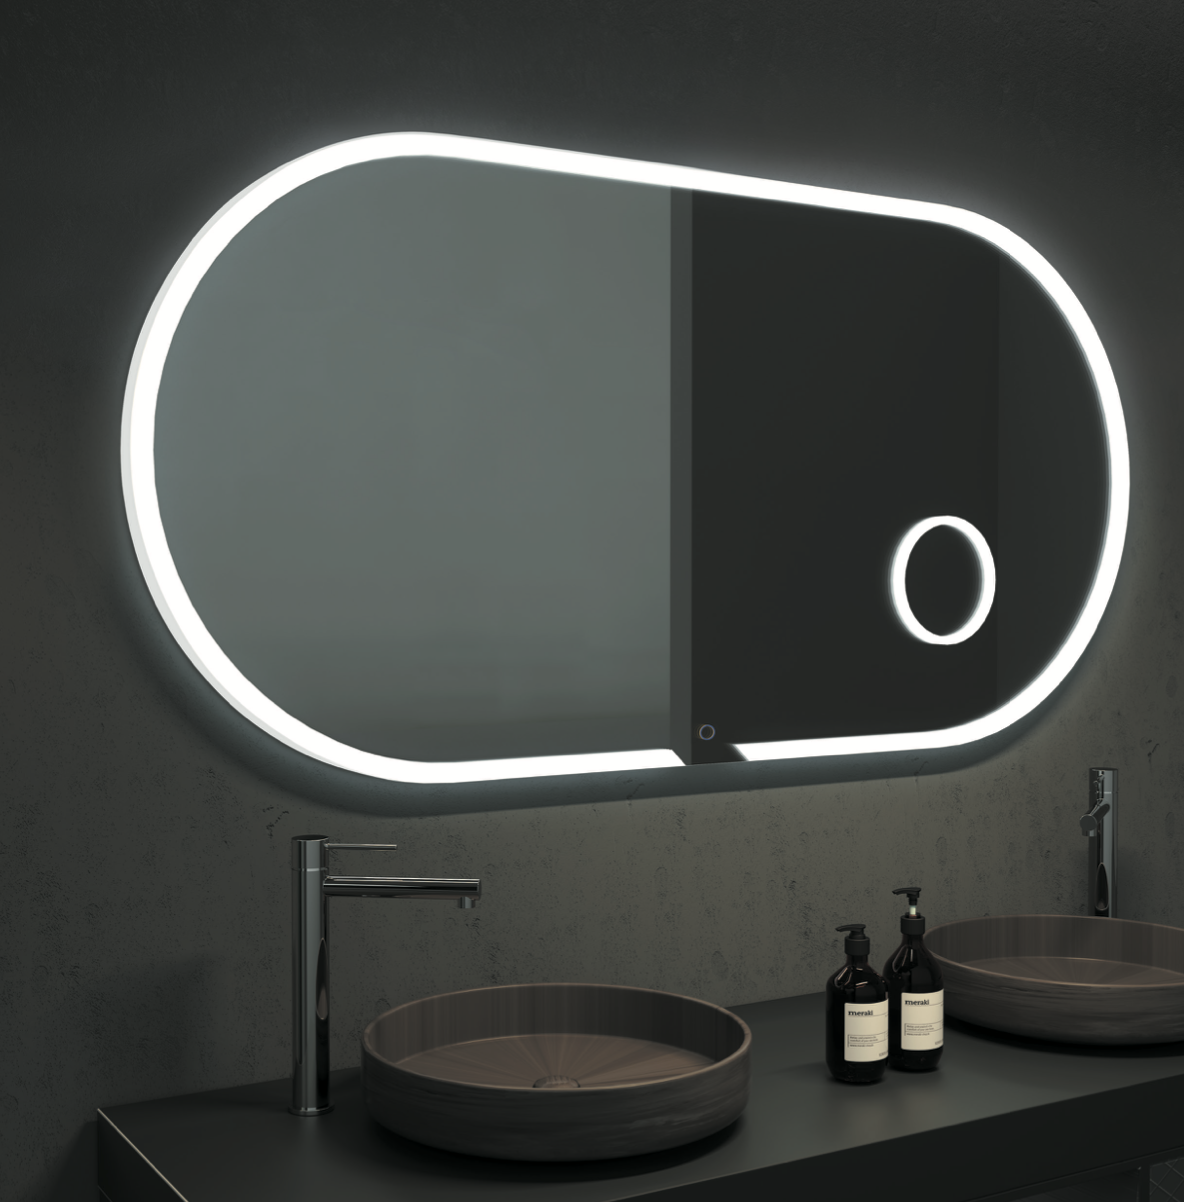 Elliptical bathroom mirror illuminated frame with x3 magnification Indiana by Ledimex